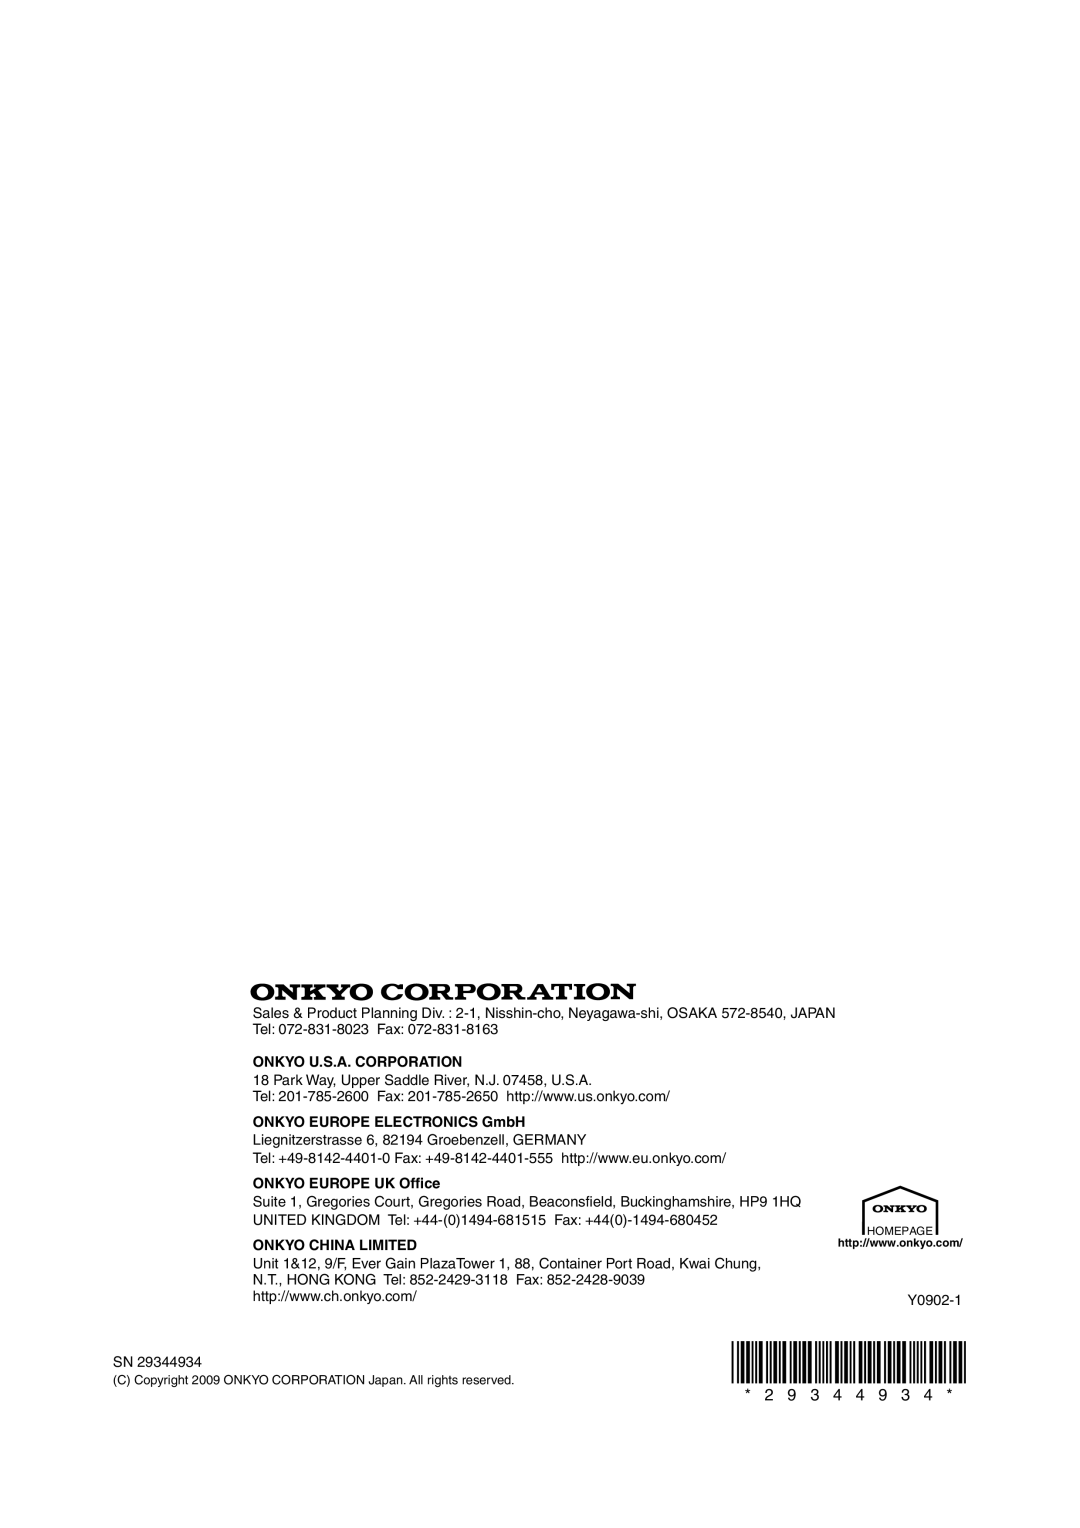 Onkyo HT-S5200 instruction manual 3 4 4 9 3 